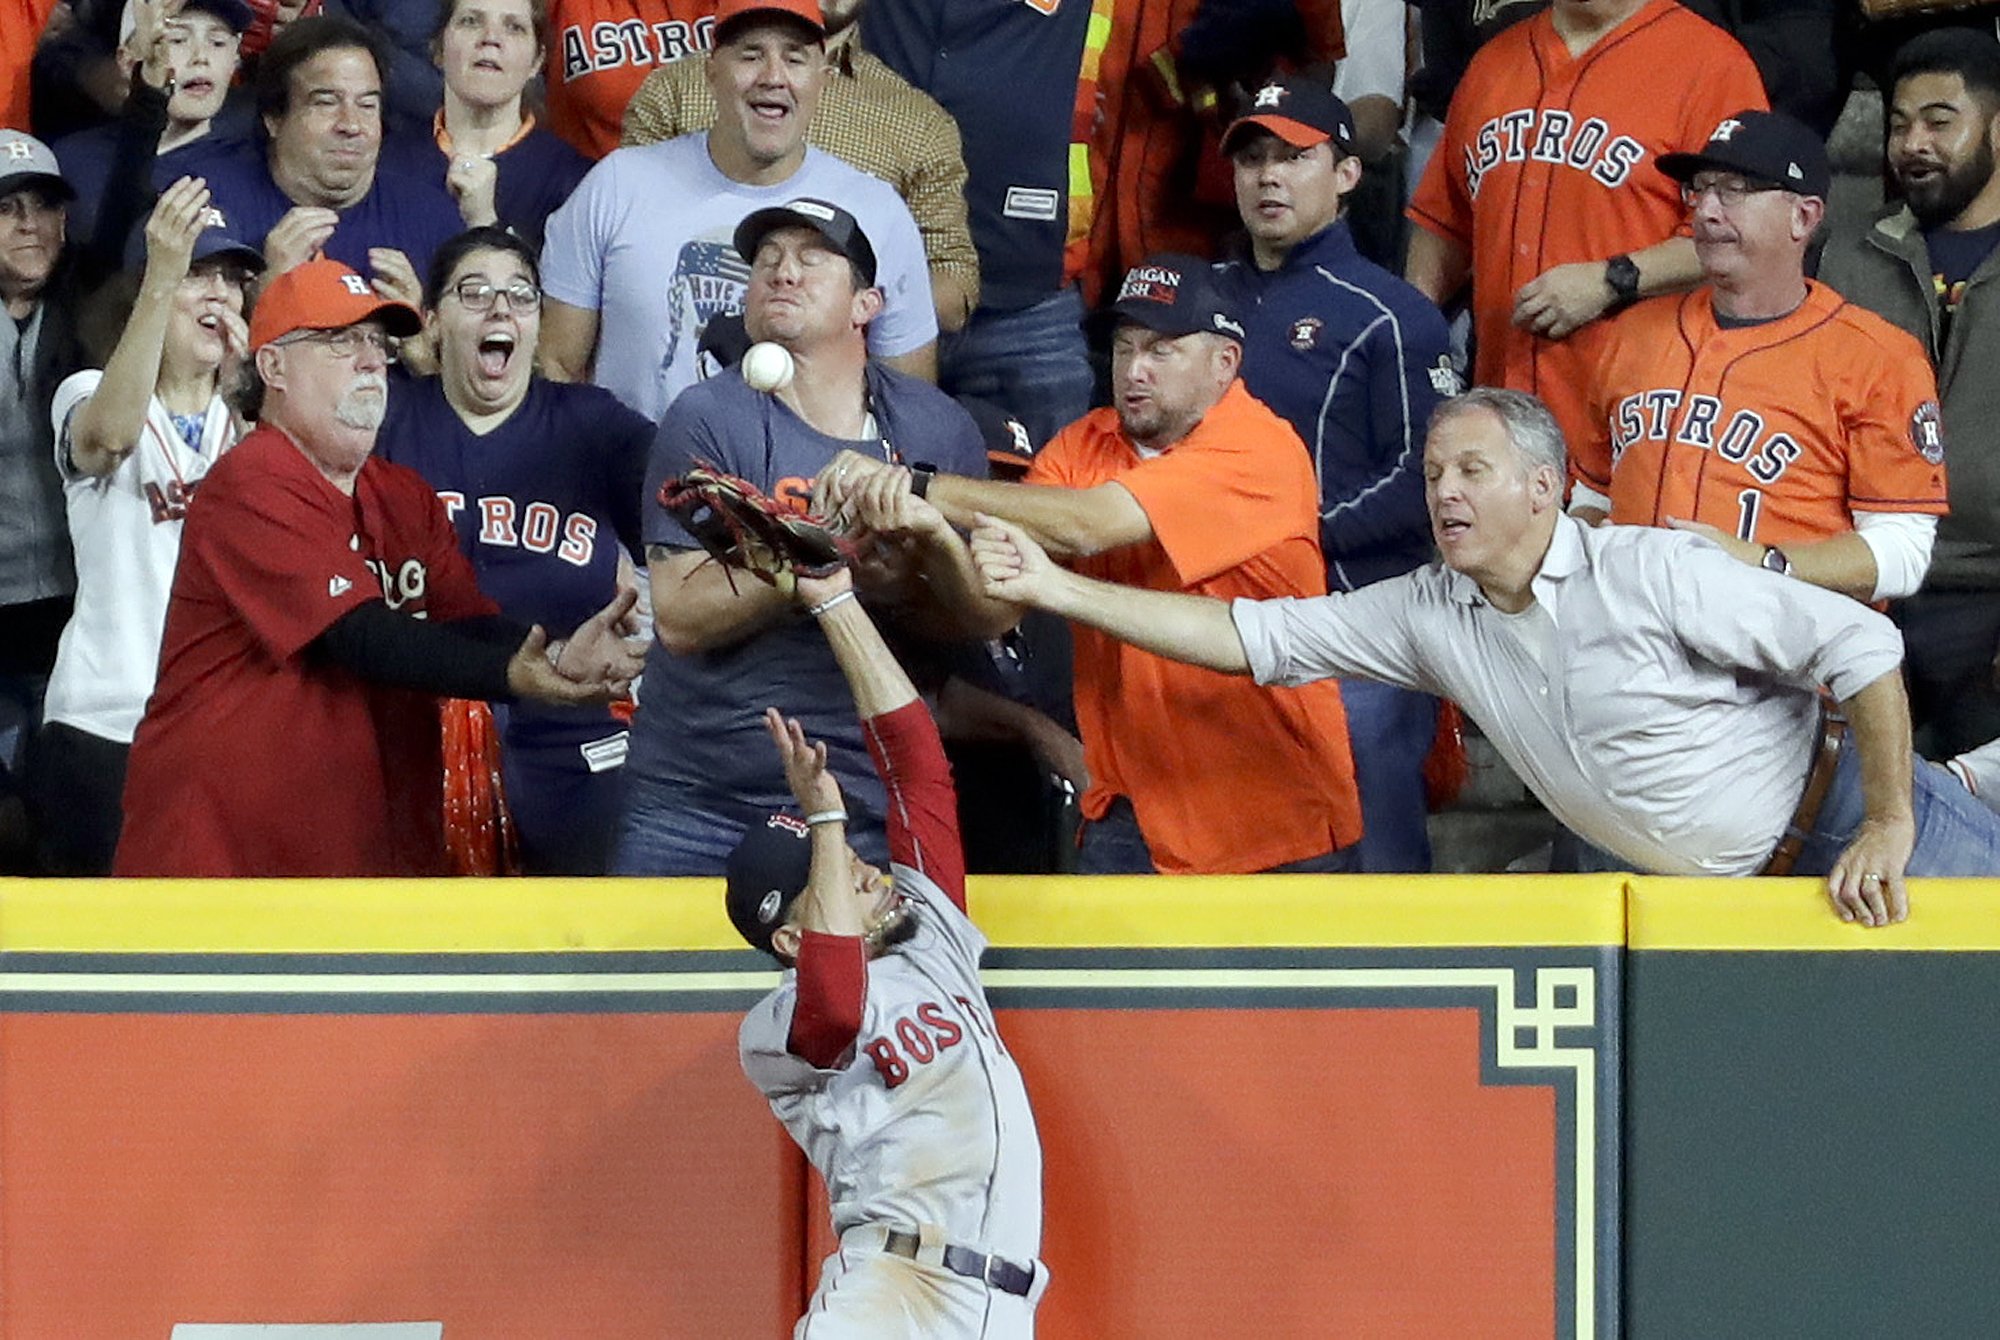 Astros' Alex Bregman Stops to Help Fan Wearing His Jersey Whose